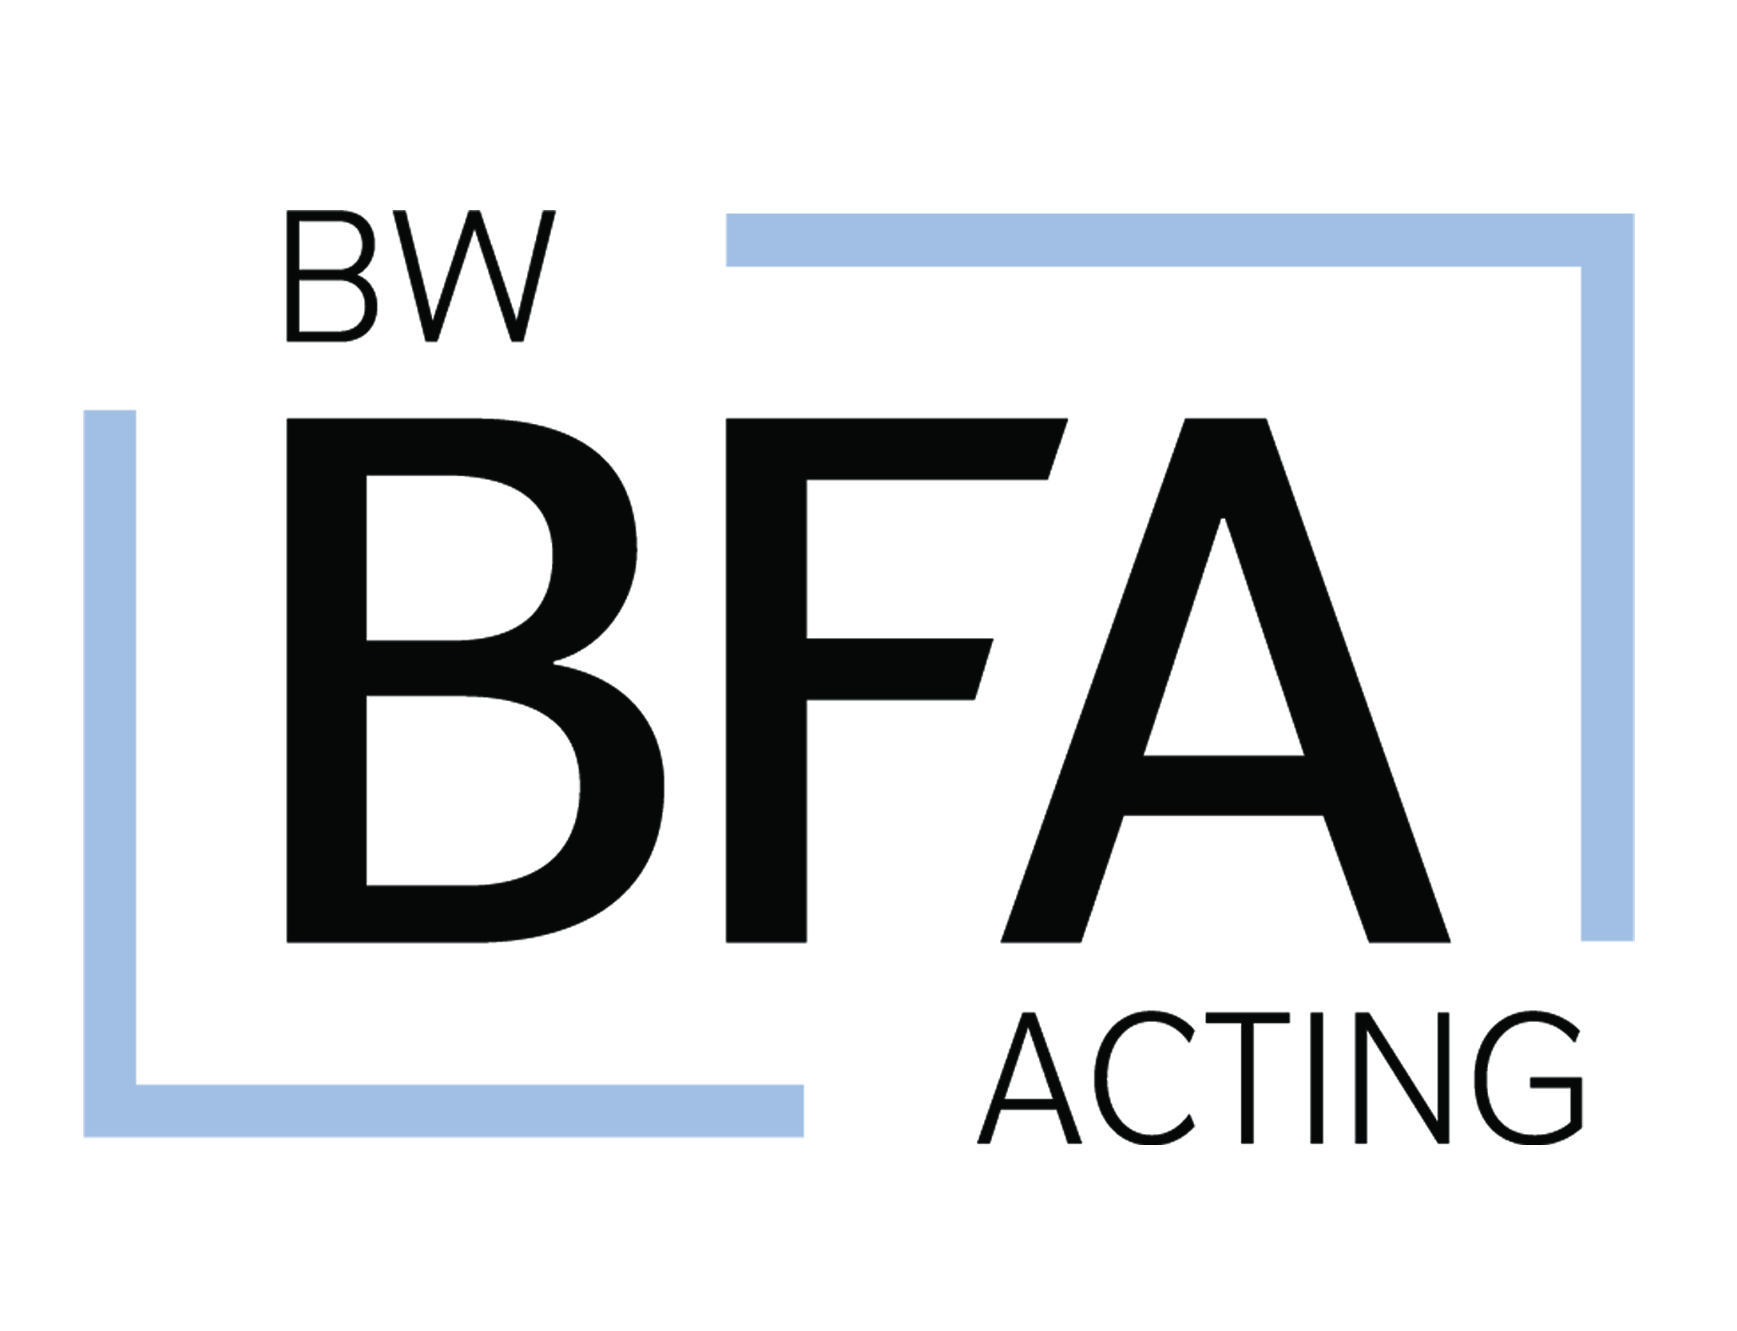 BW BFA Showcase